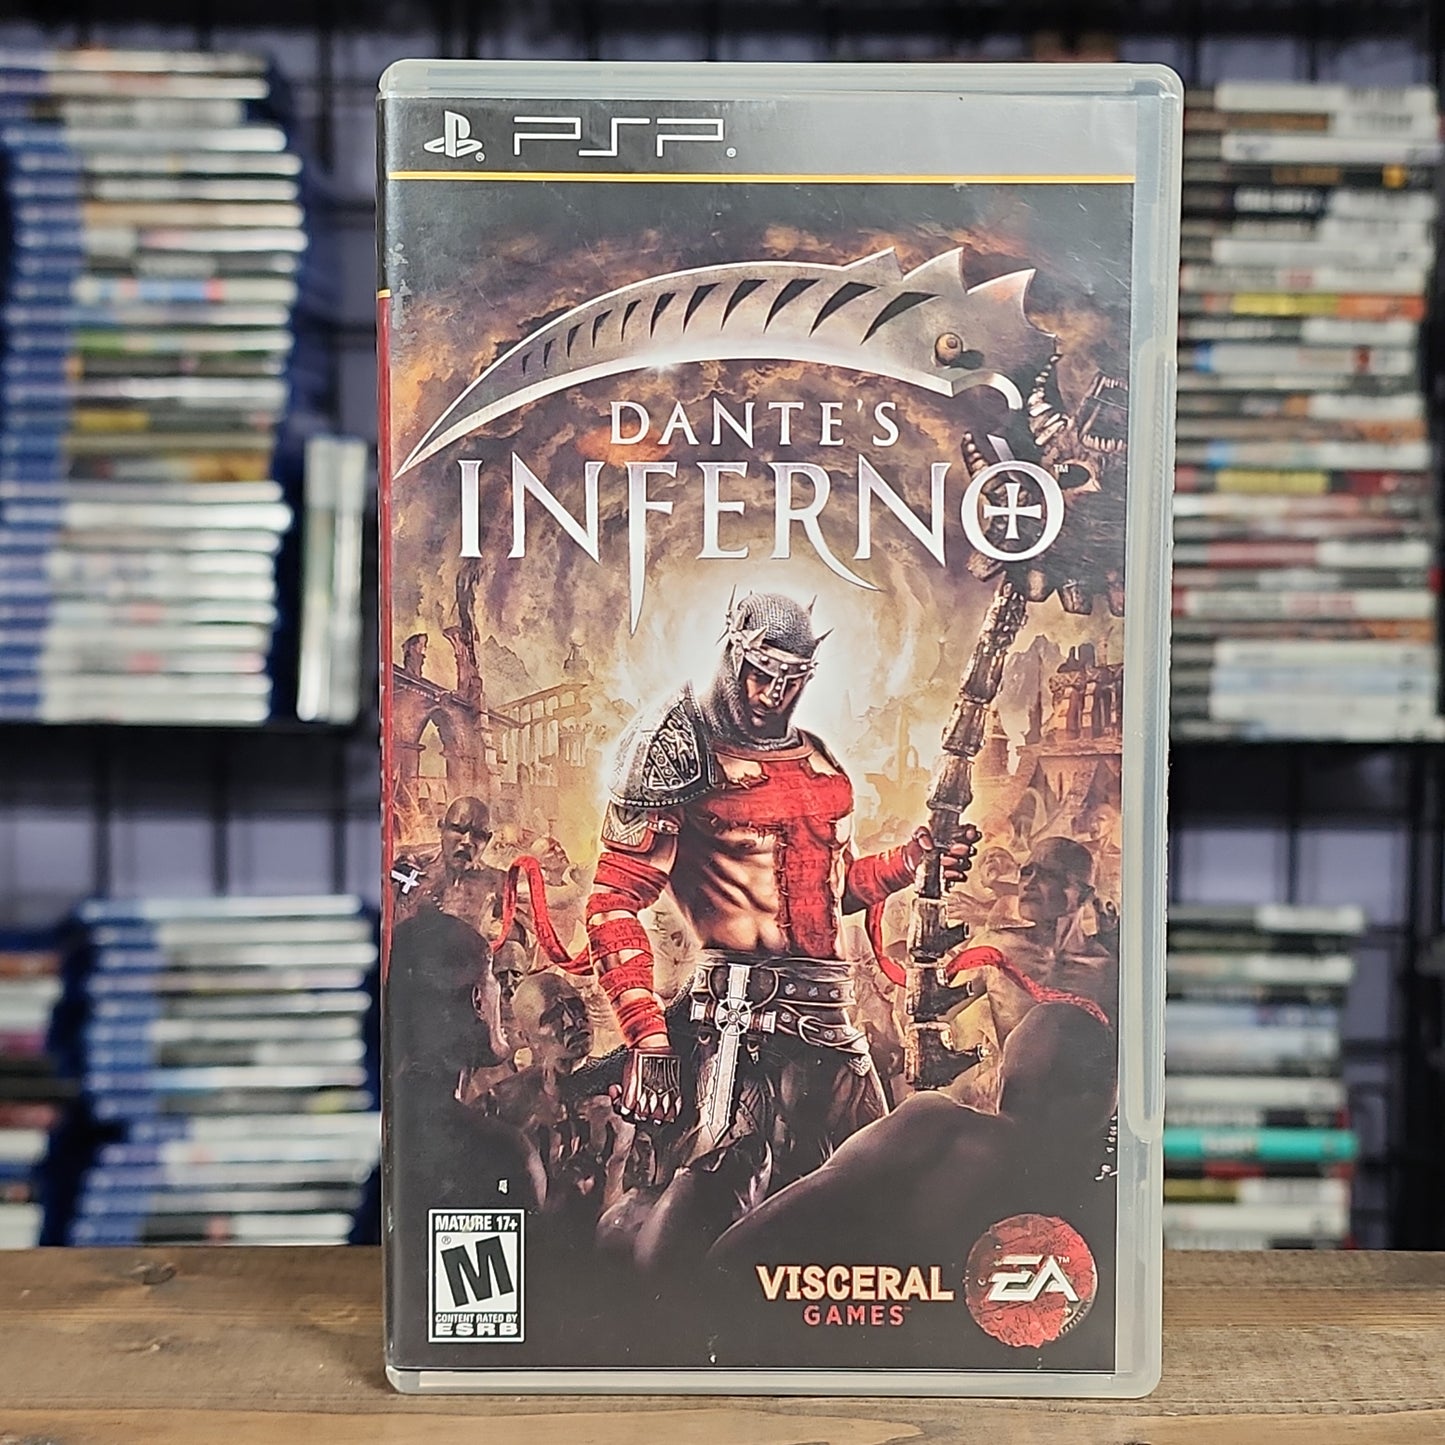 PSP - Dante's Inferno